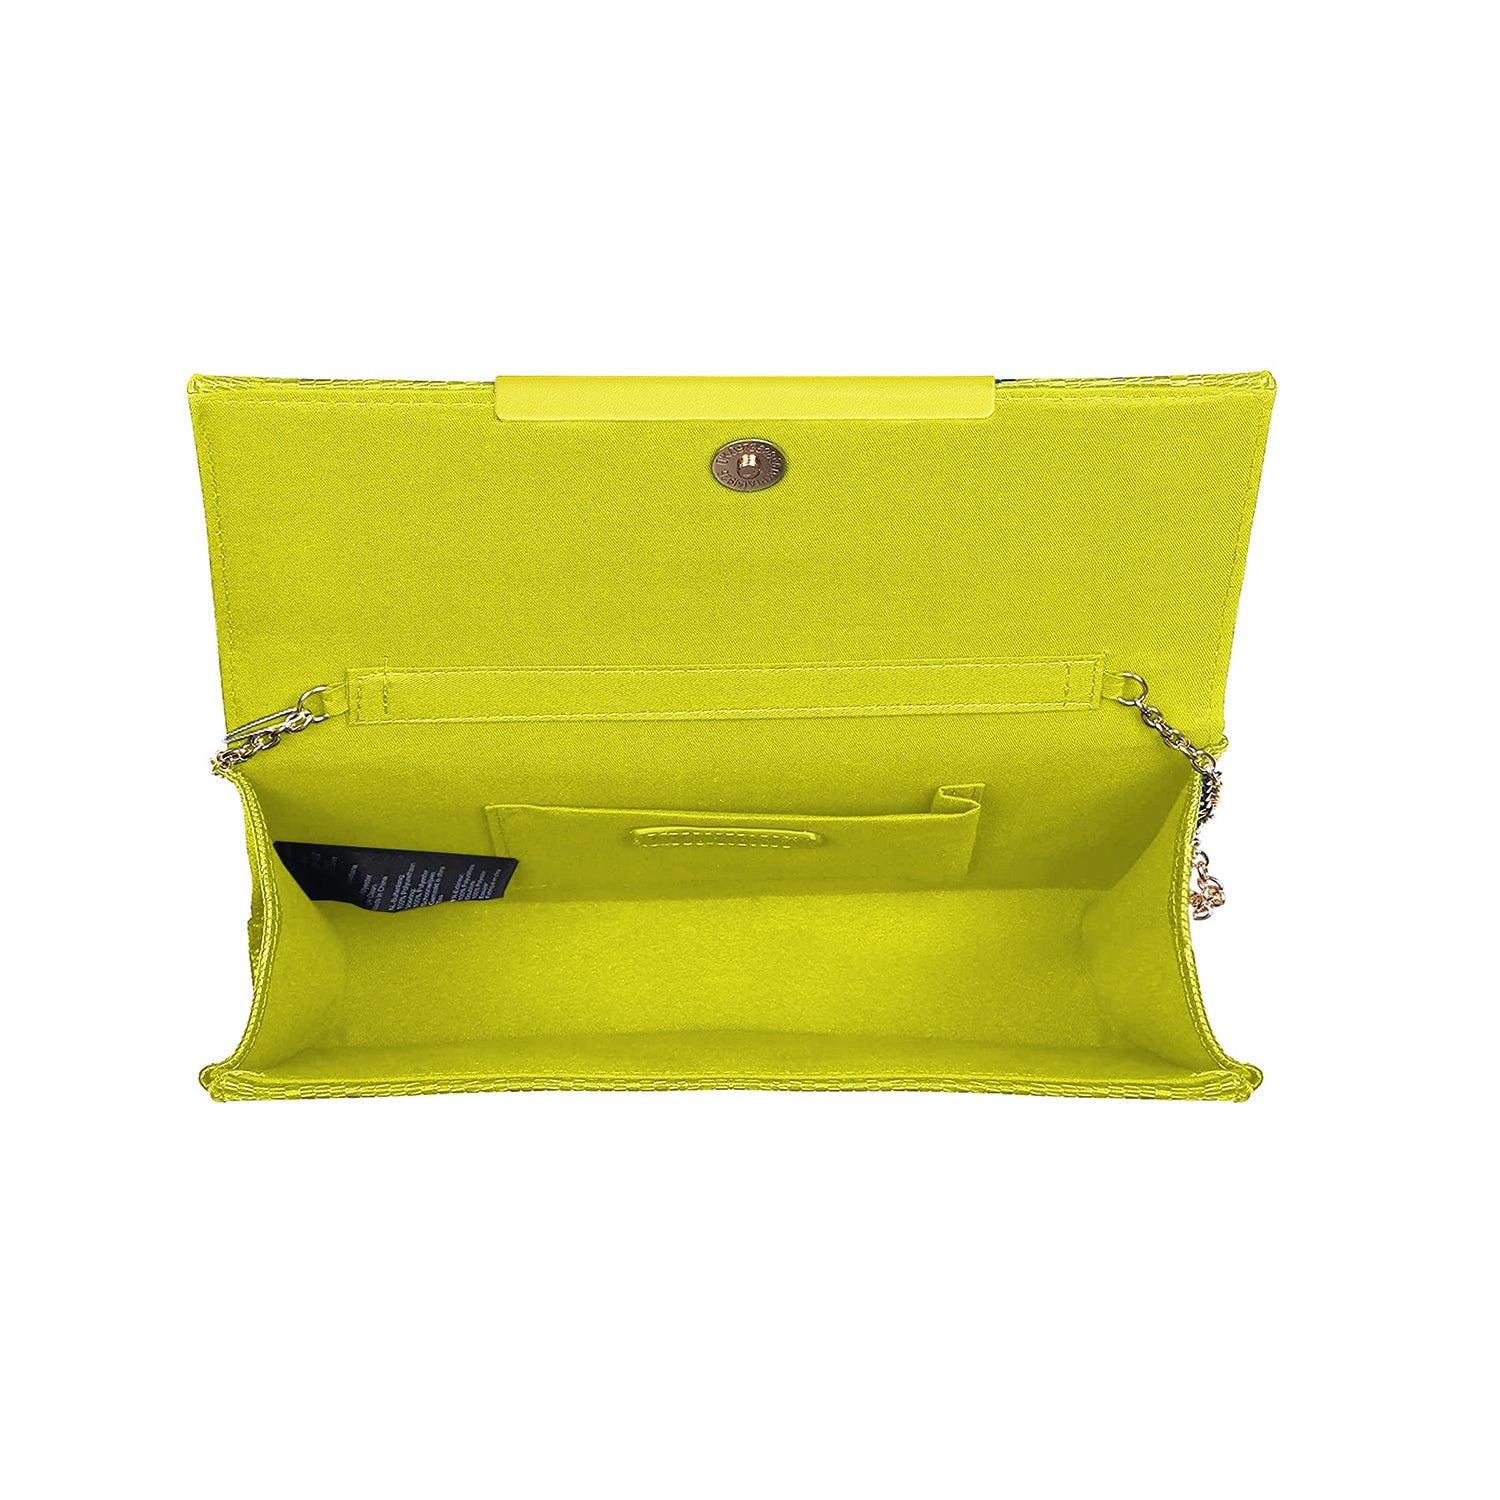 Volcom Candy Shop Handbag - Yellow Handbag - Yellow Purse - $49.50 - Lulus